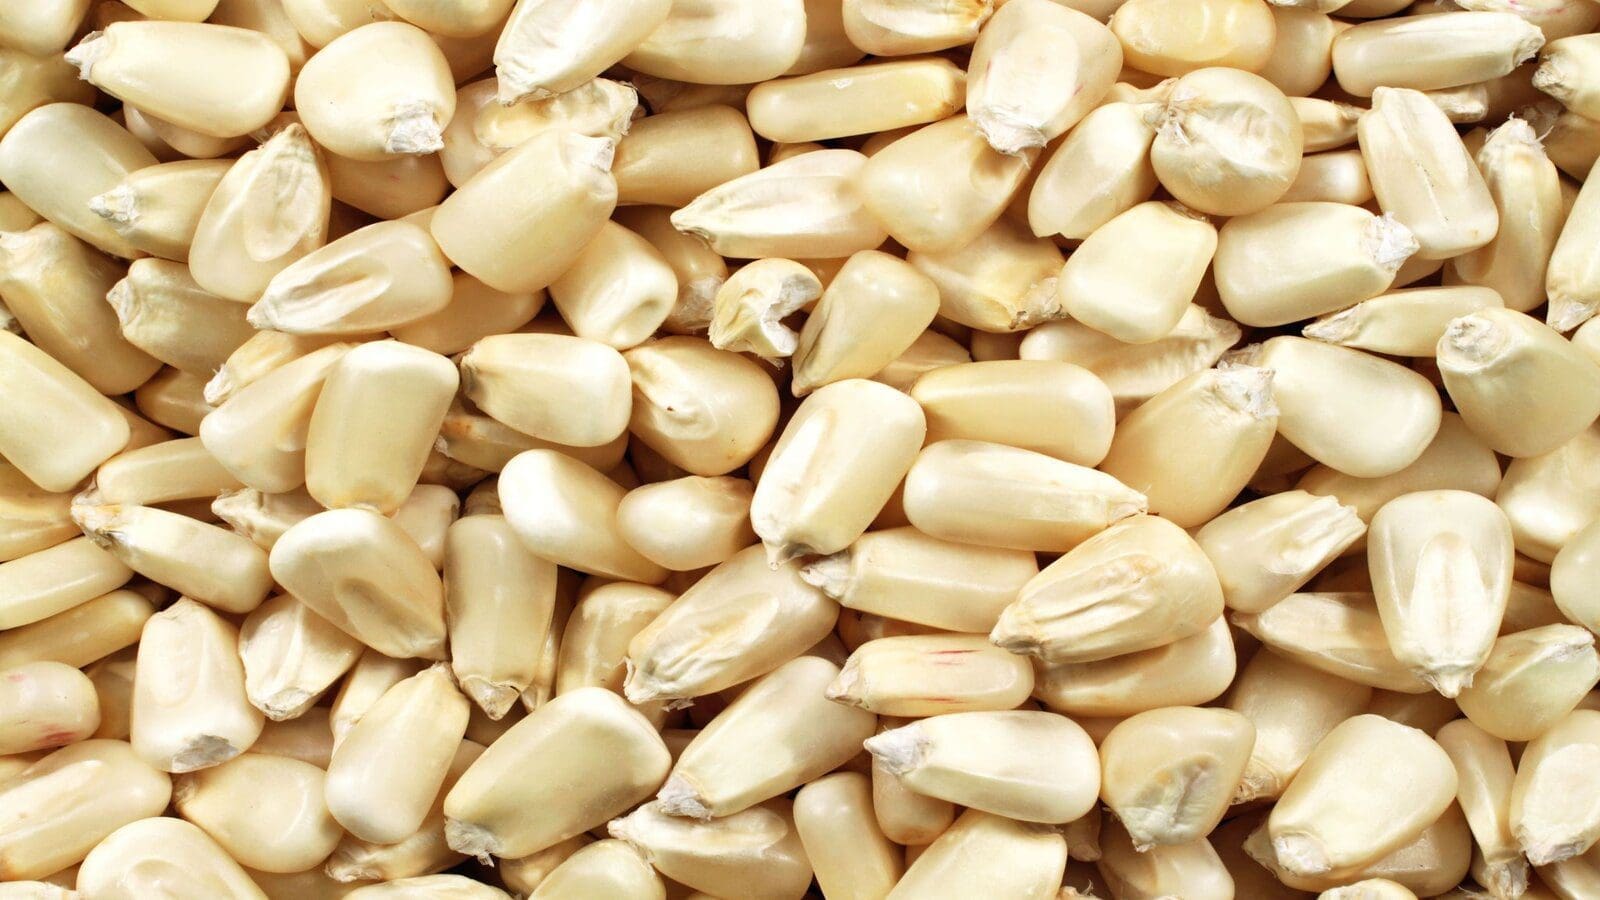 Tanzania, Uganda willing to export maize to tackle drought crisis in Zambia